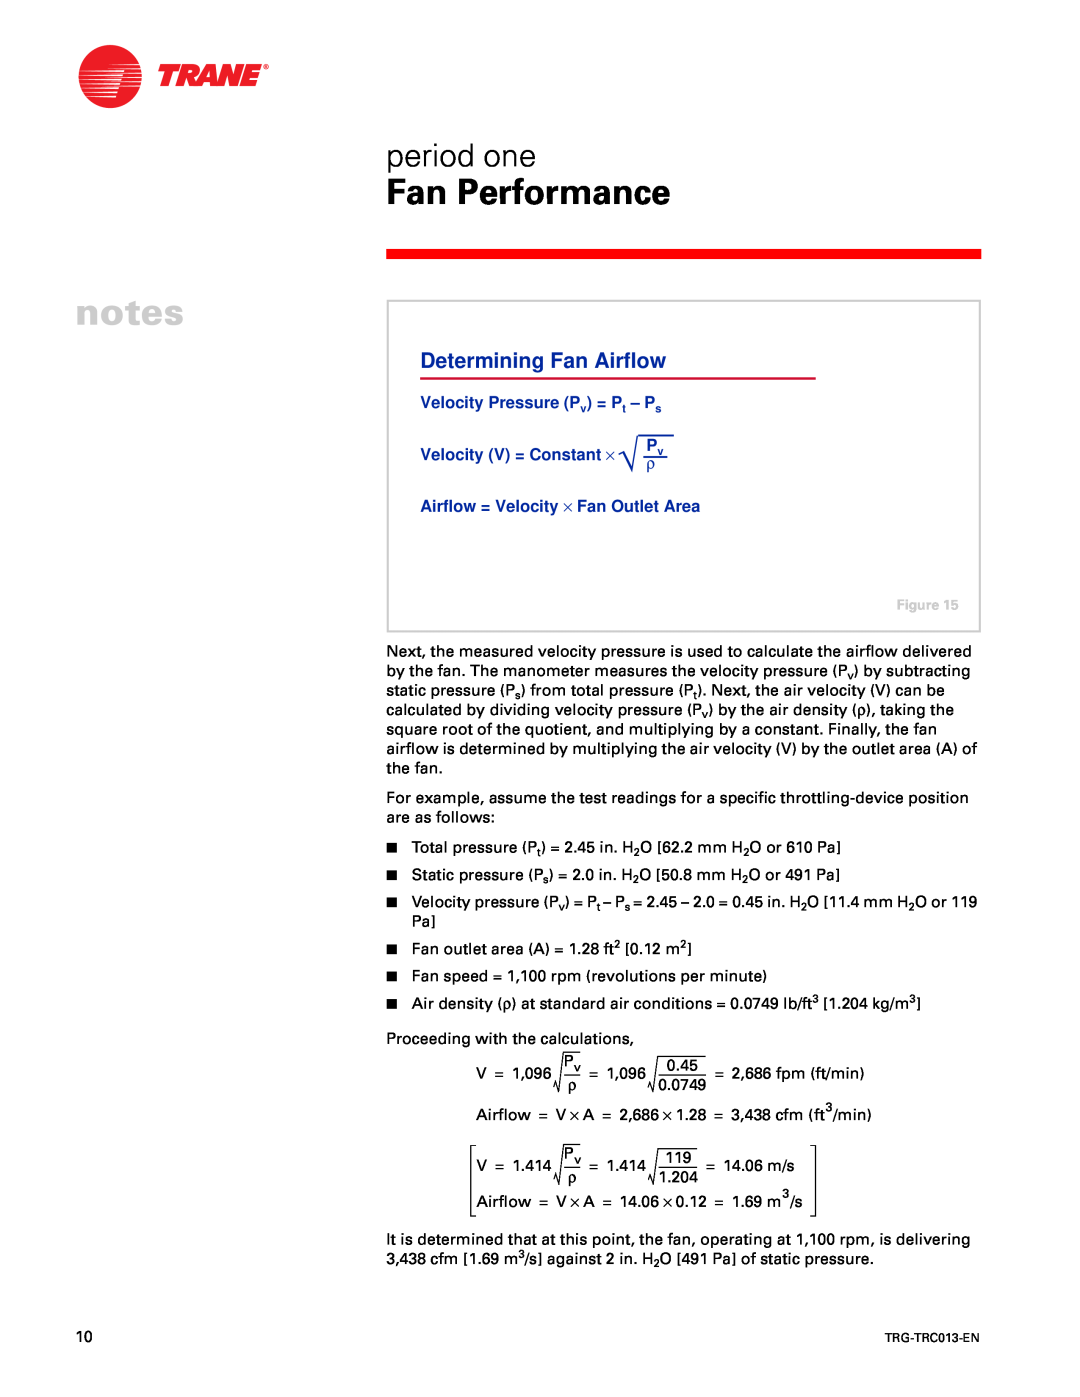 Trane TRG-TRC013-EN manual Determining Fan Airflow, Velocity Pressure Pv = Pt - P s, Velocity V = Constant ⋅ √ Pρ 